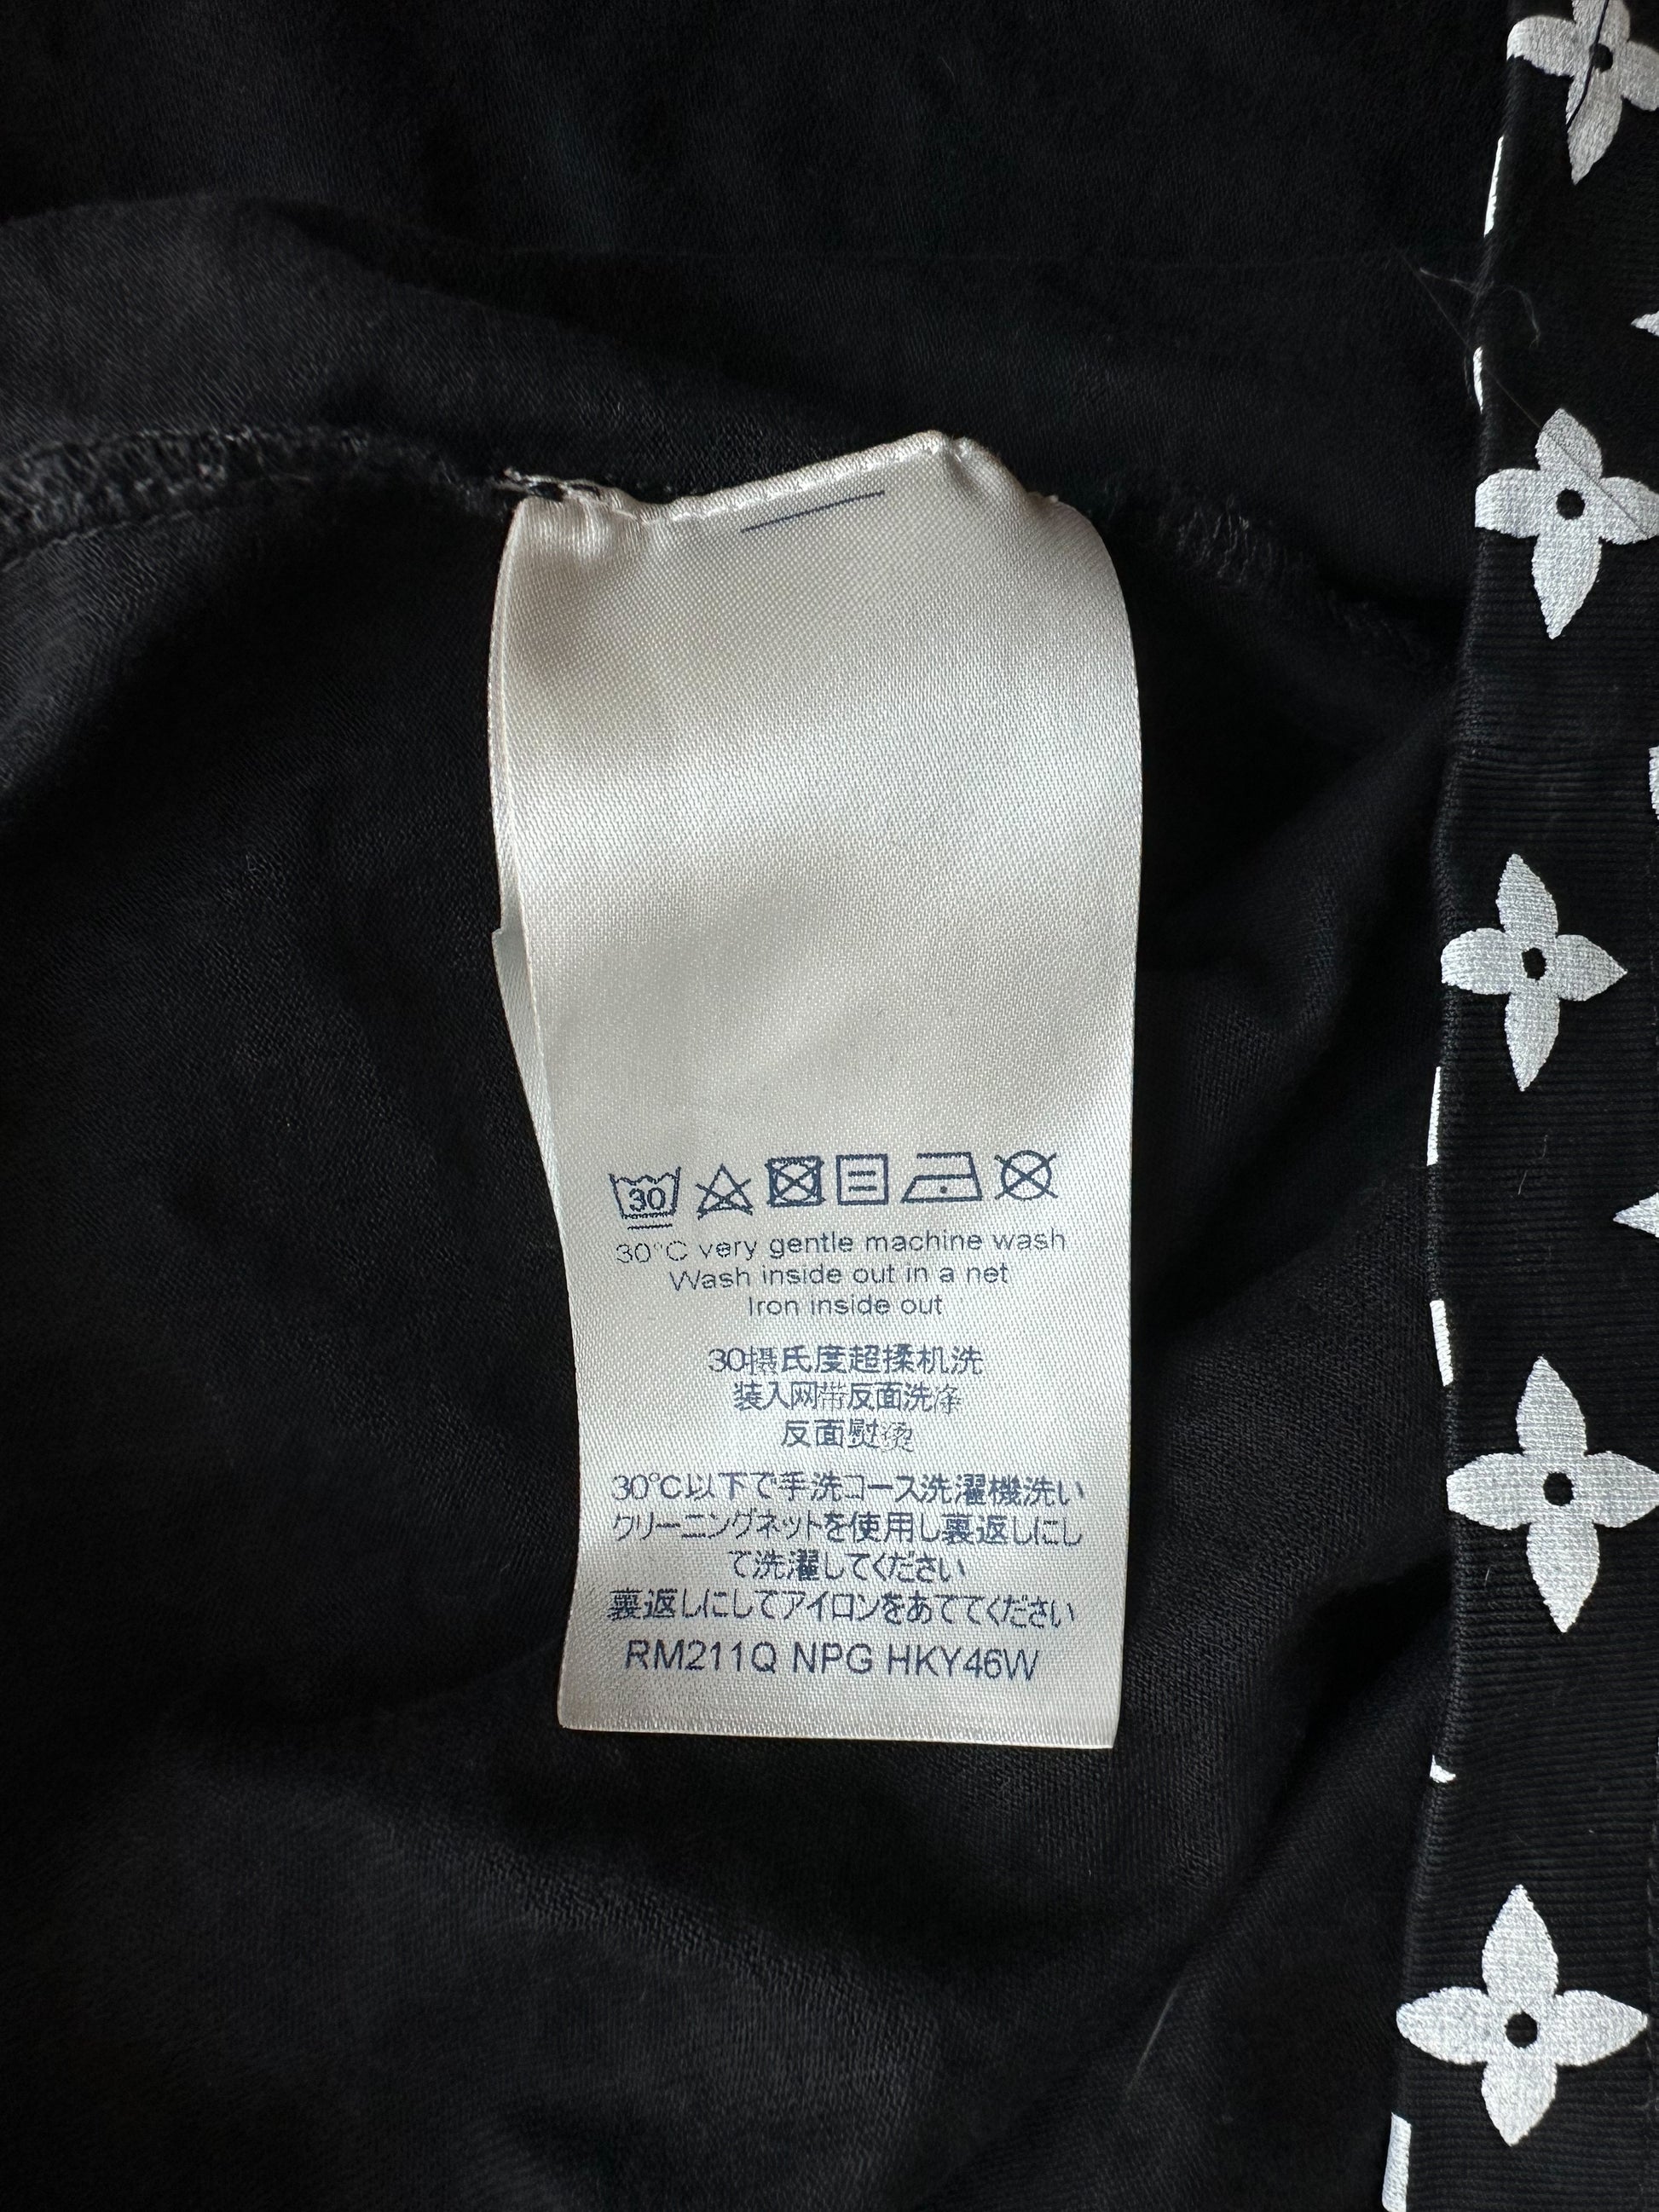 Louis Vuitton Black & White Monogram Gradient T-Shirt